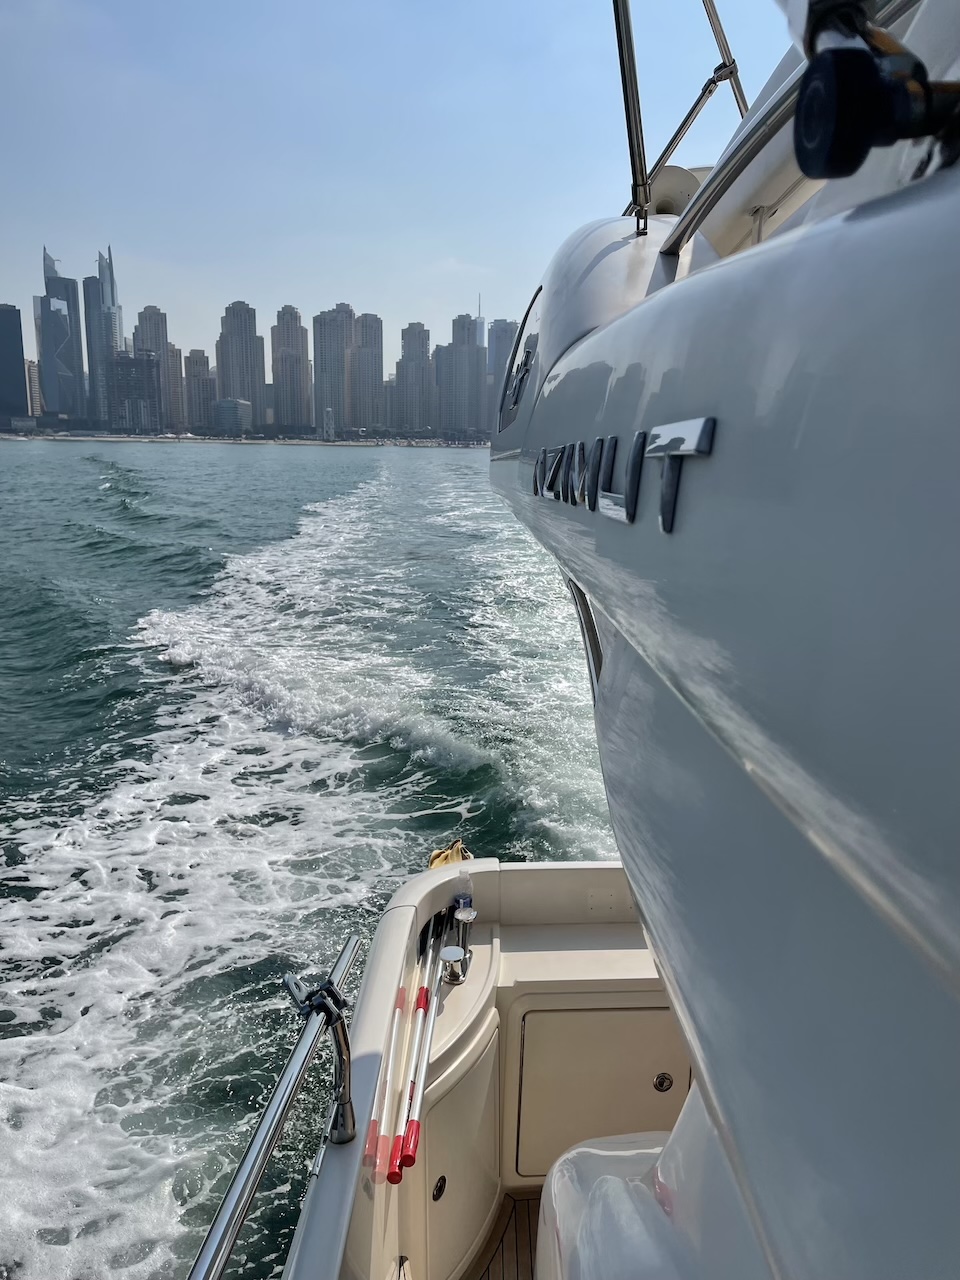 Yacht rental in Dubai Marina: Your choice of the perfect sea journey